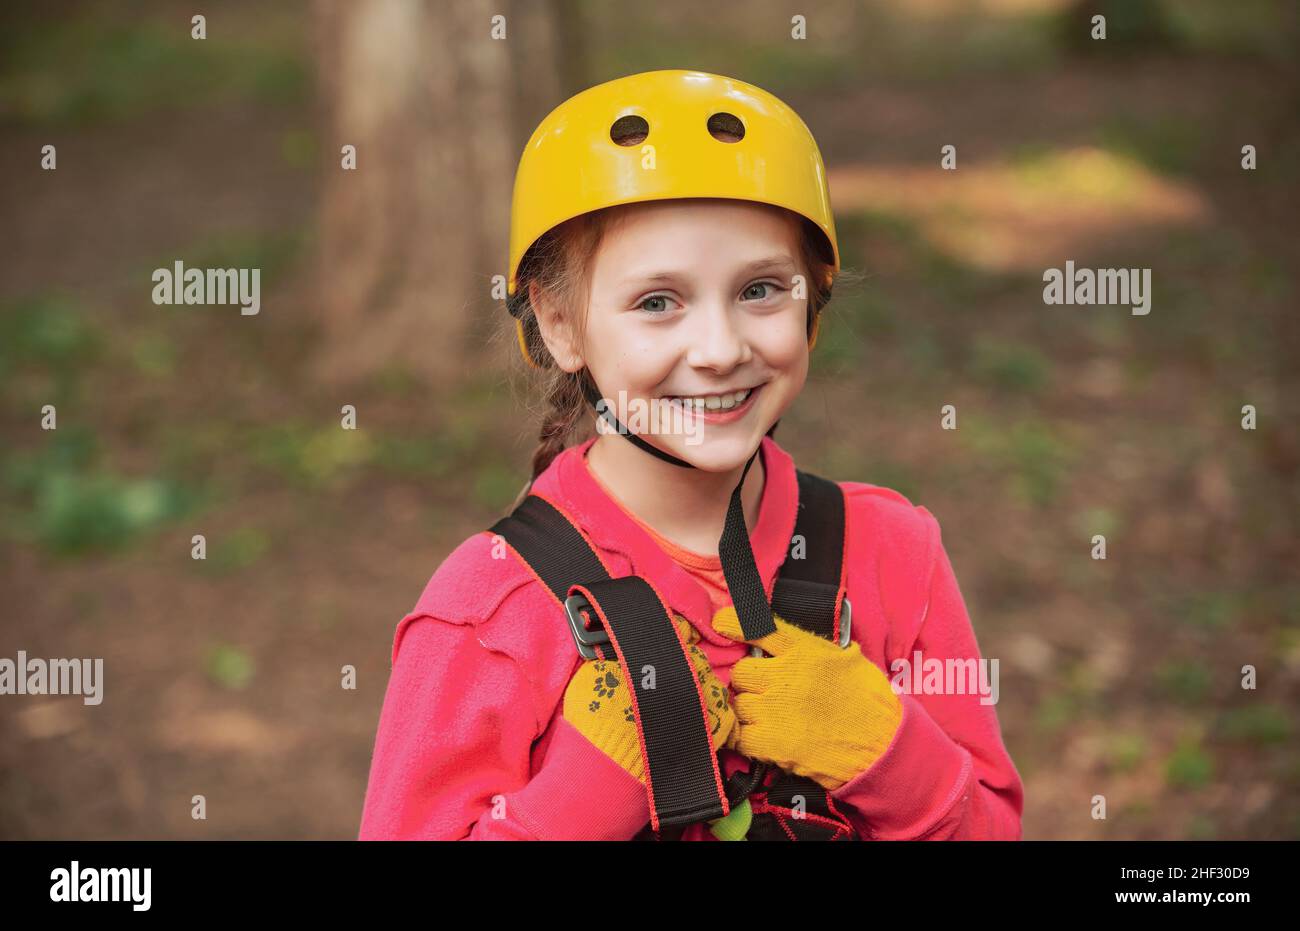 Go Ape Adventure. Child. Playground. Rope park - climbing center. Kid climbing trees in park. Climber child on training. Balance beam and rope bridges Stock Photo